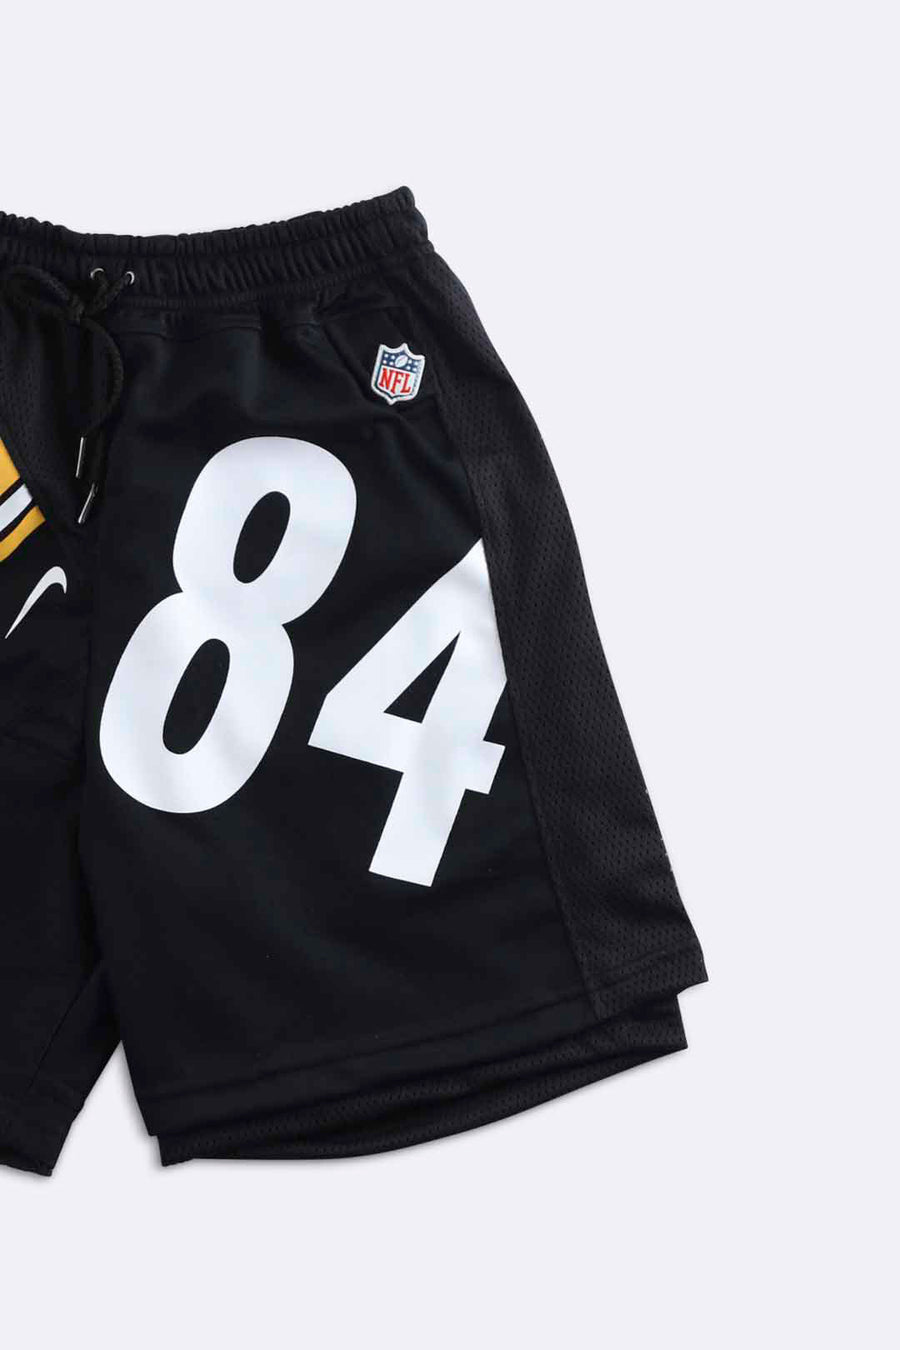 Rework Unisex Steelers NFL Jersey Shorts - Women-XS, Men-XXS